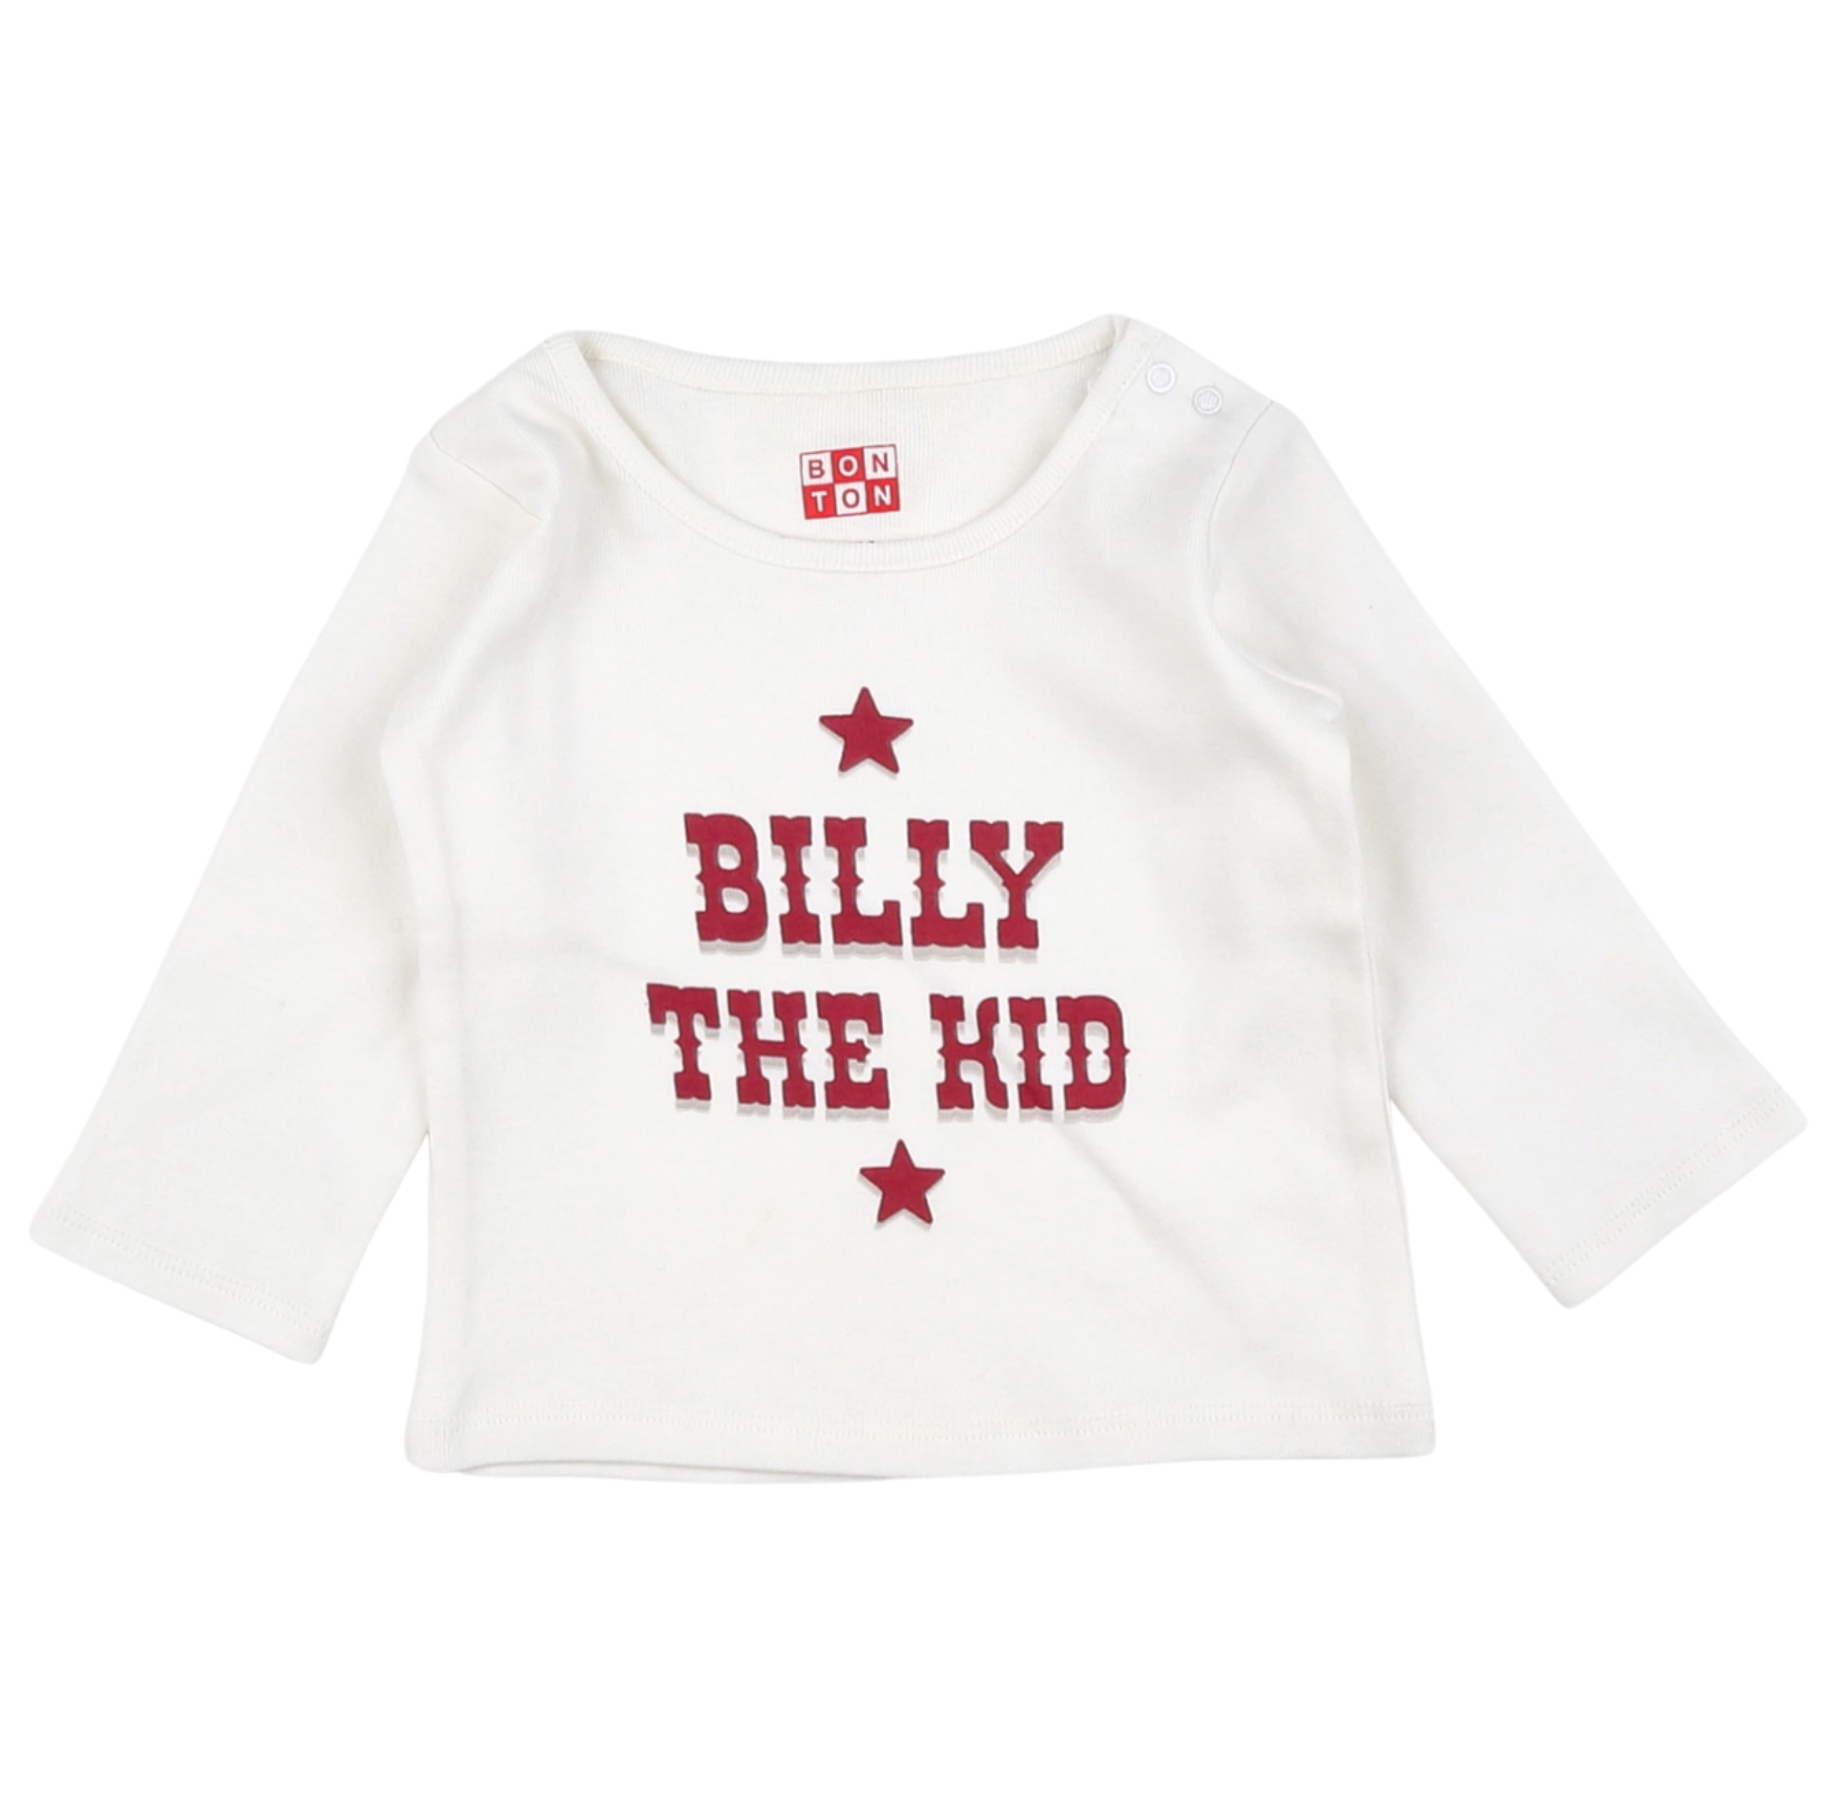 BONTON - T-shirt " Billy the kid" - 6 mois